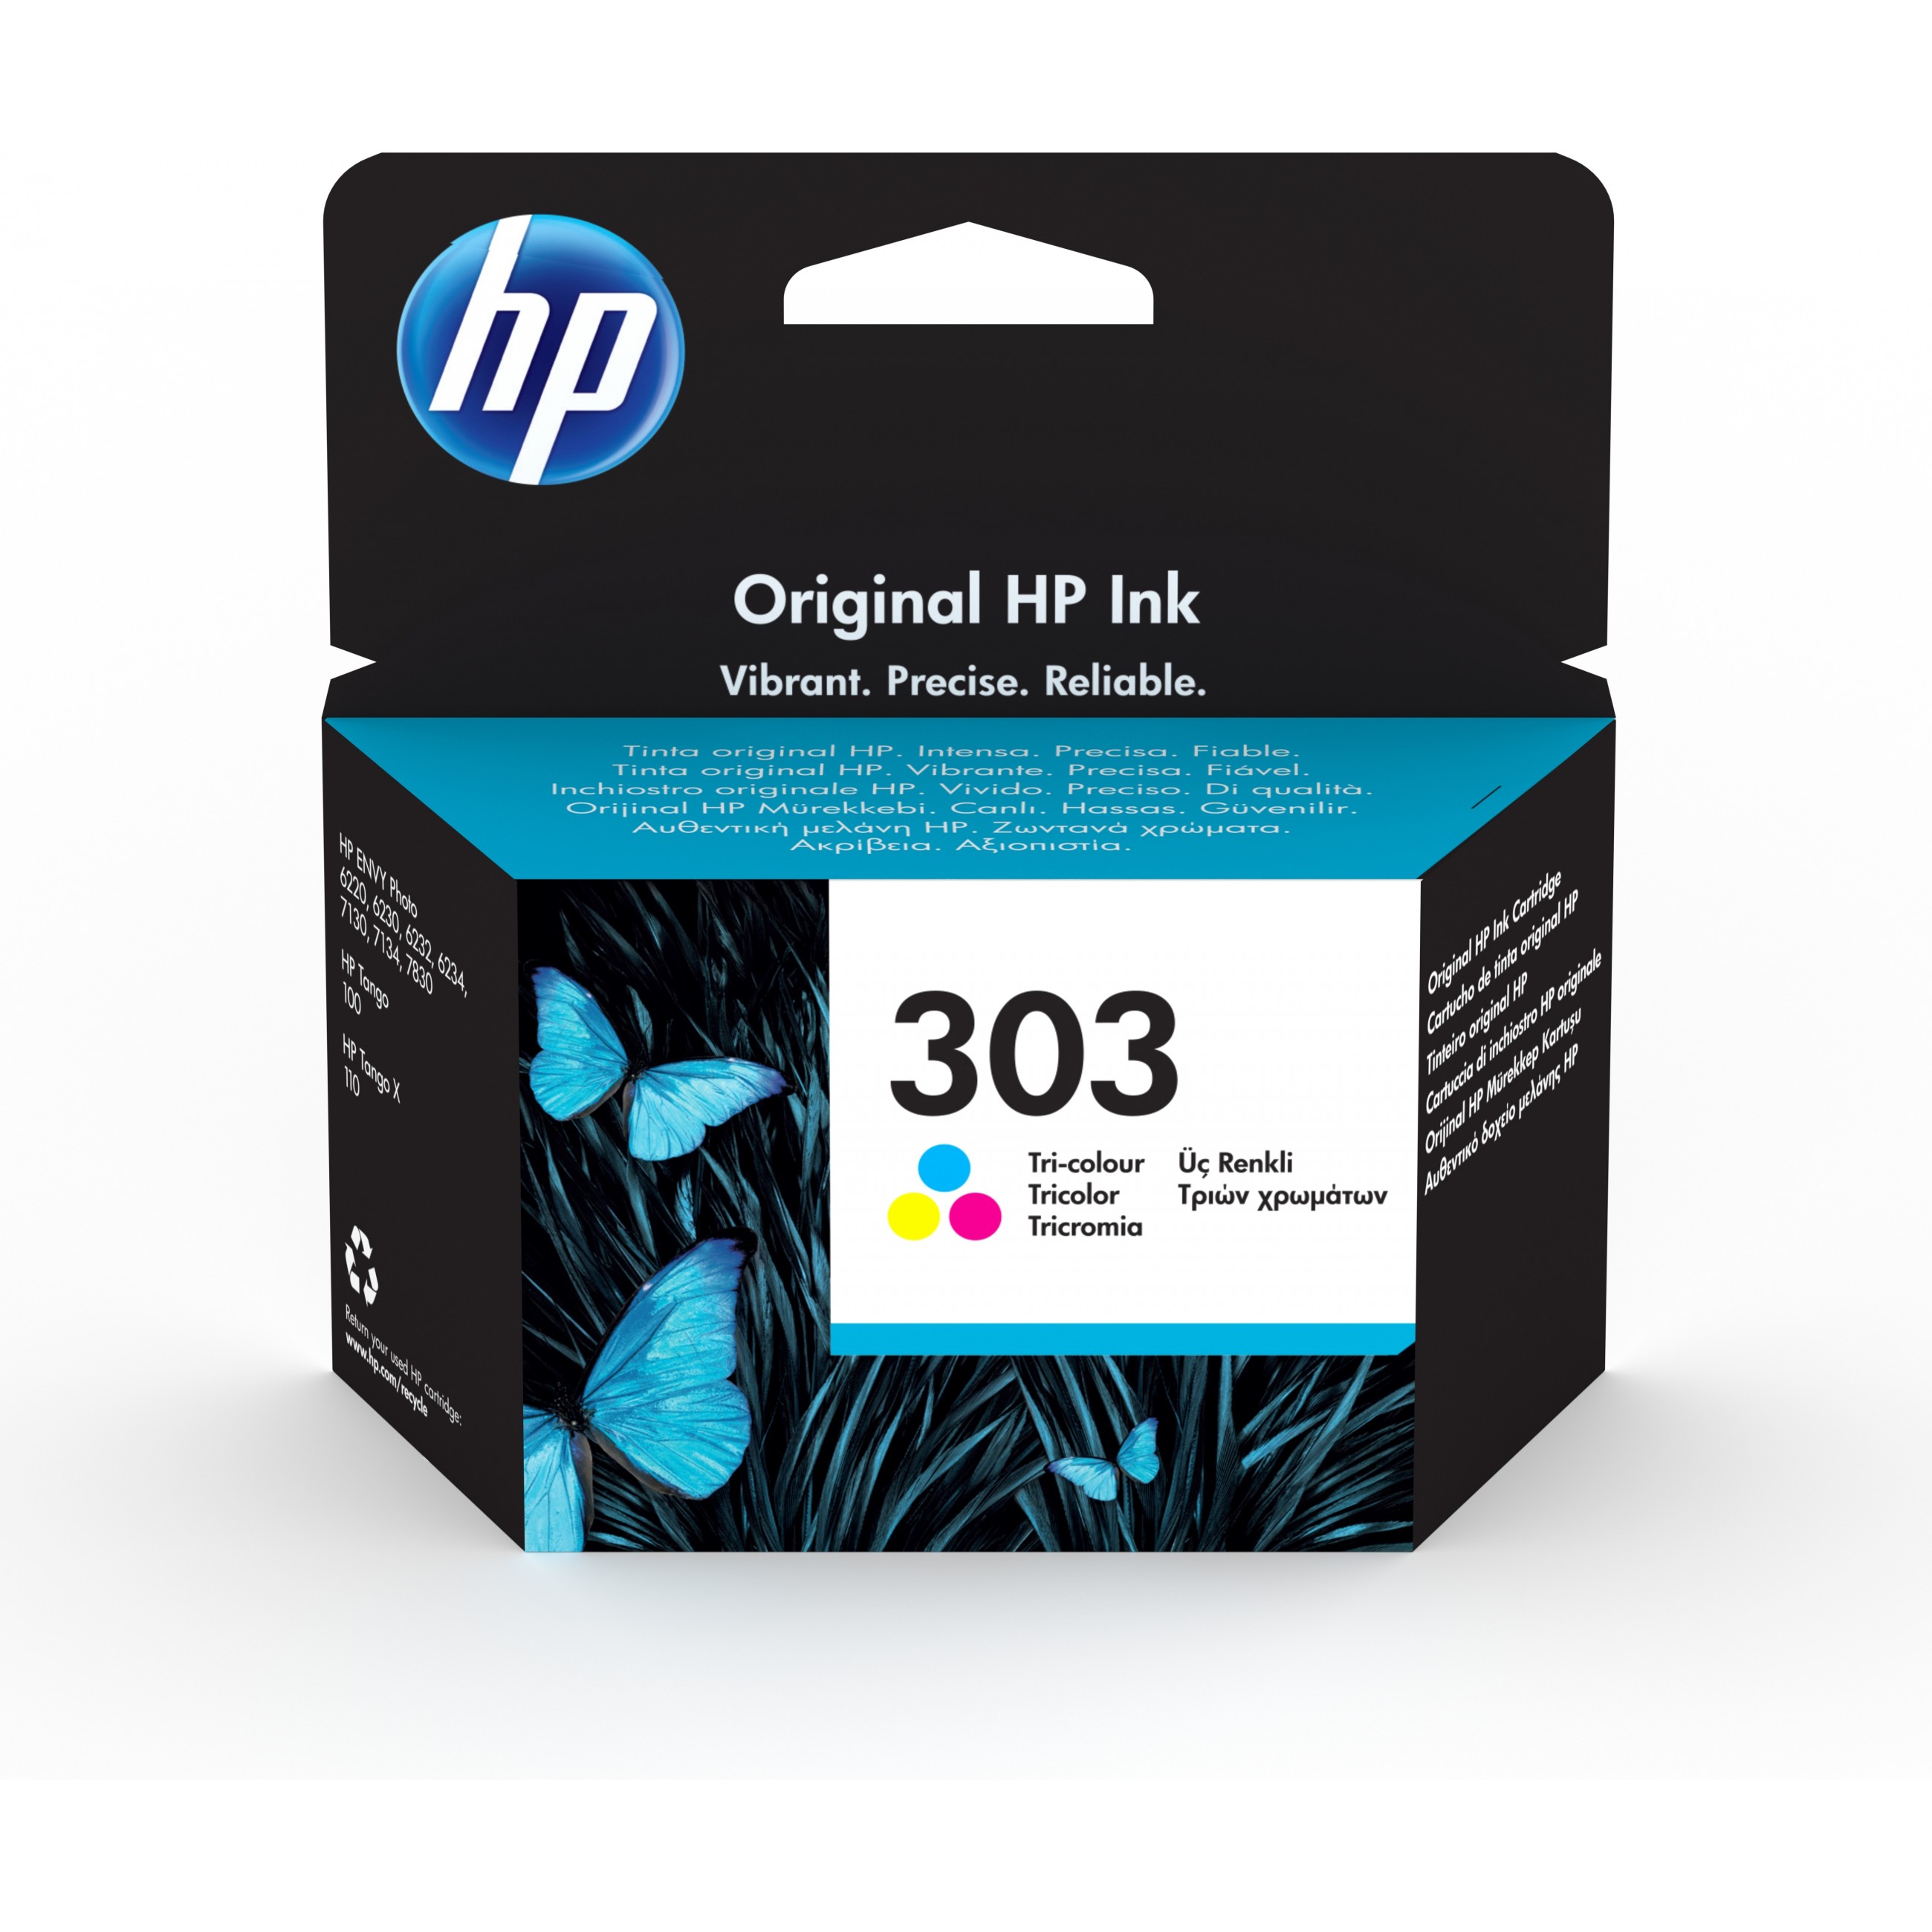 HP 303 Tri-color Original ink cartridge - T6N01AE#UUS